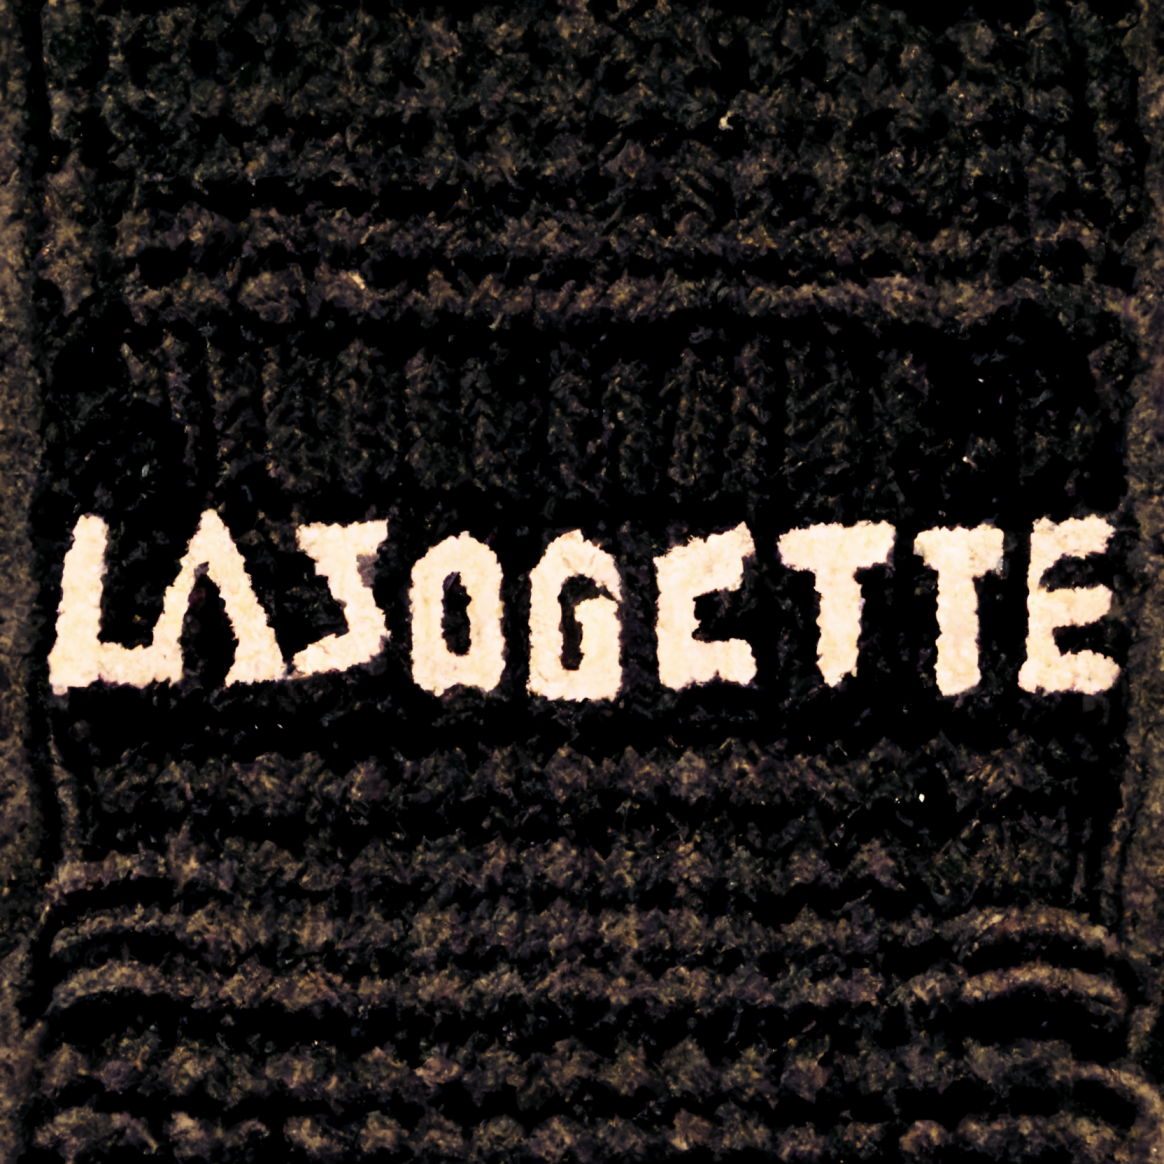 Lasogette NFT